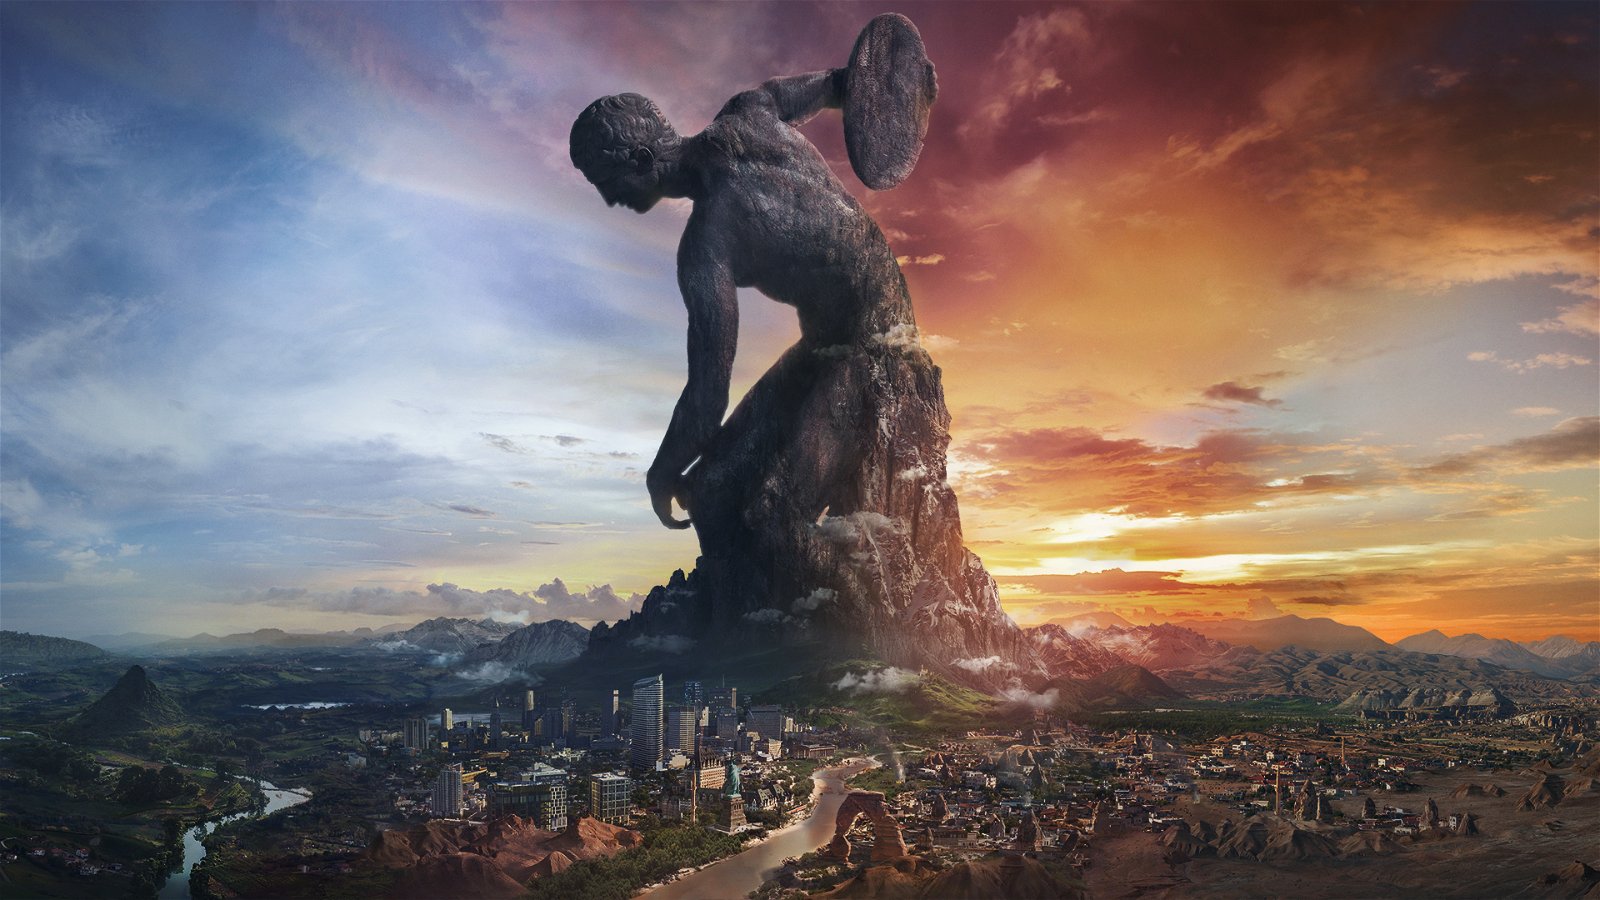 Sid Meier’s Civilization VI: Rise and Fall Review - Civ VI Rises Again 1